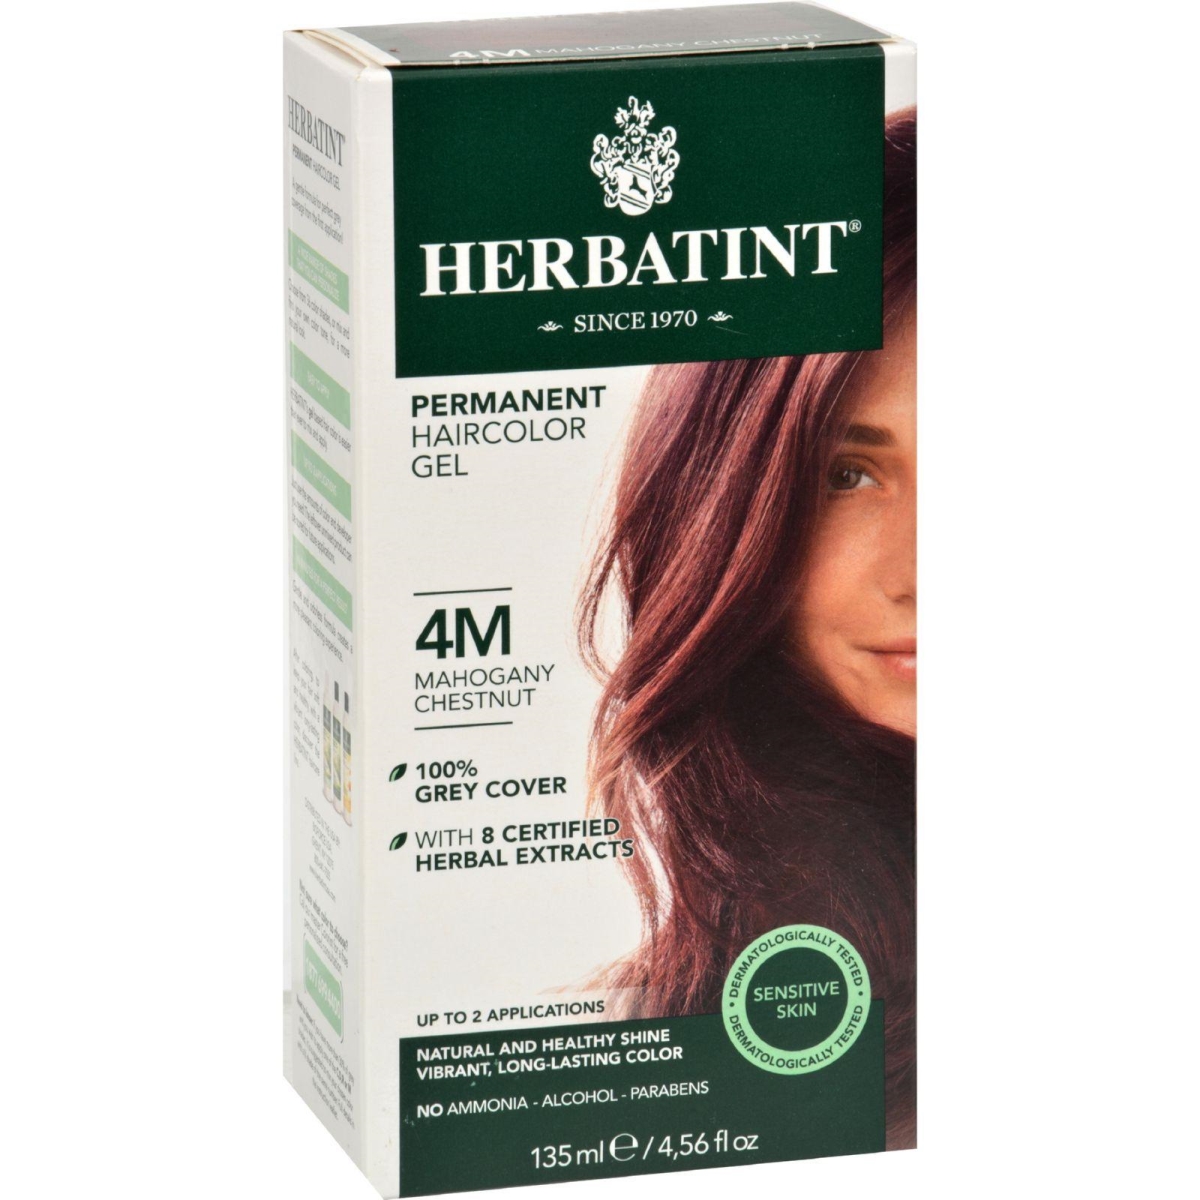 Hg0226852 135 Ml Permanent Herbal Haircolor Gel, 4m Mahogany Chestnut